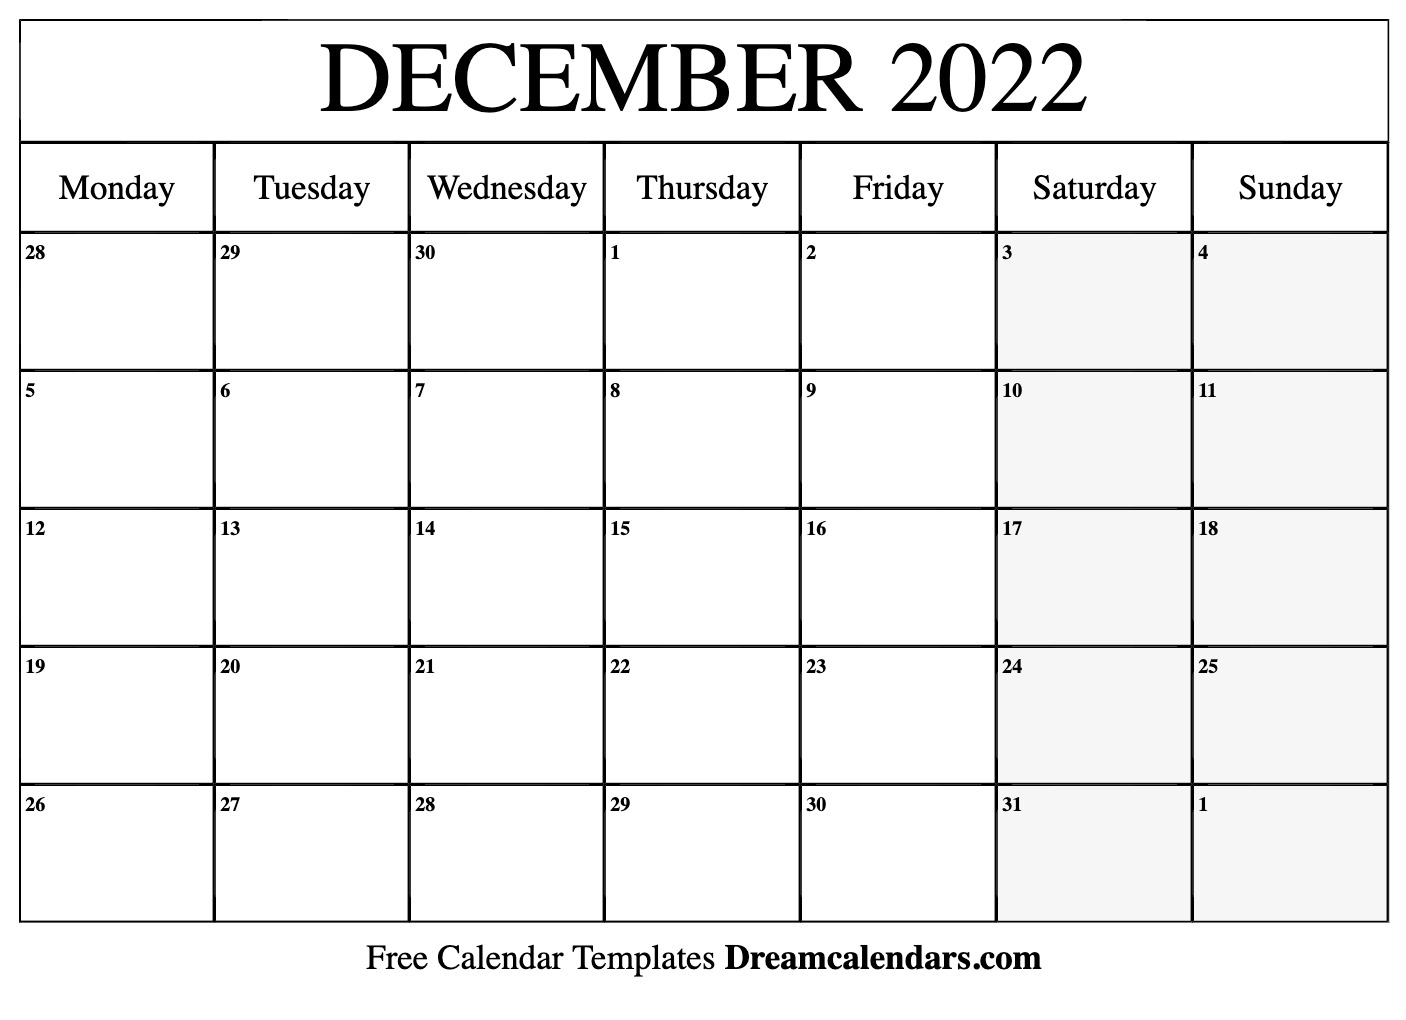 December 2022 Monthly Calendar Download Printable December 2022 Calendars